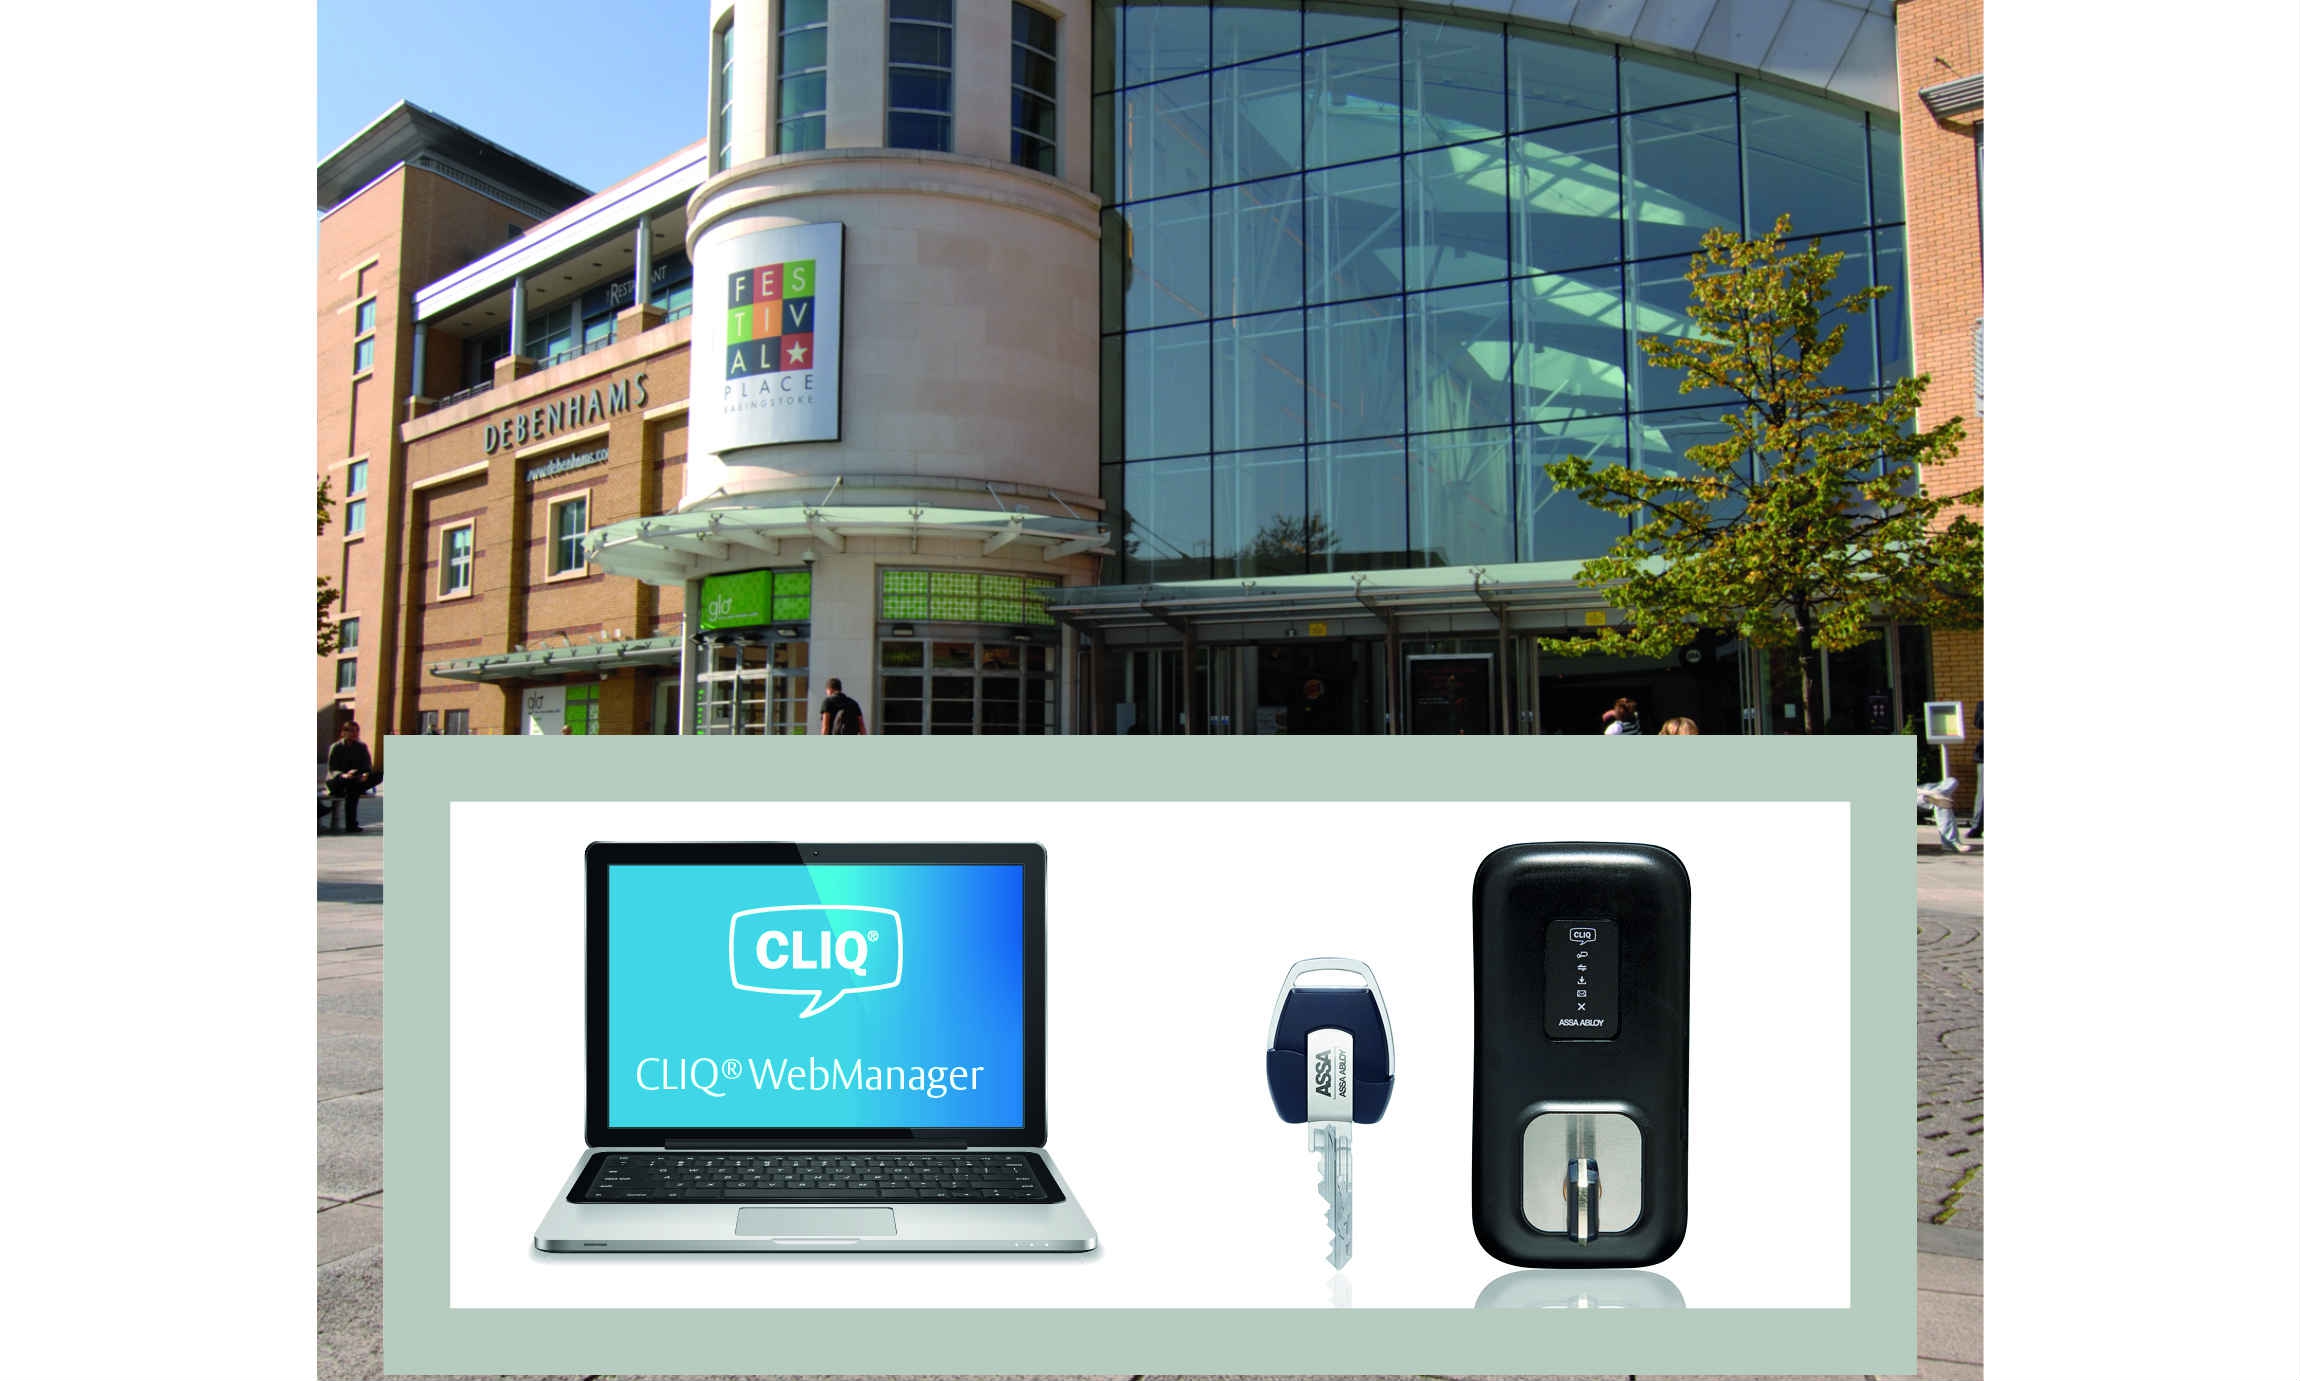 CLIQ® technology allows flexible access